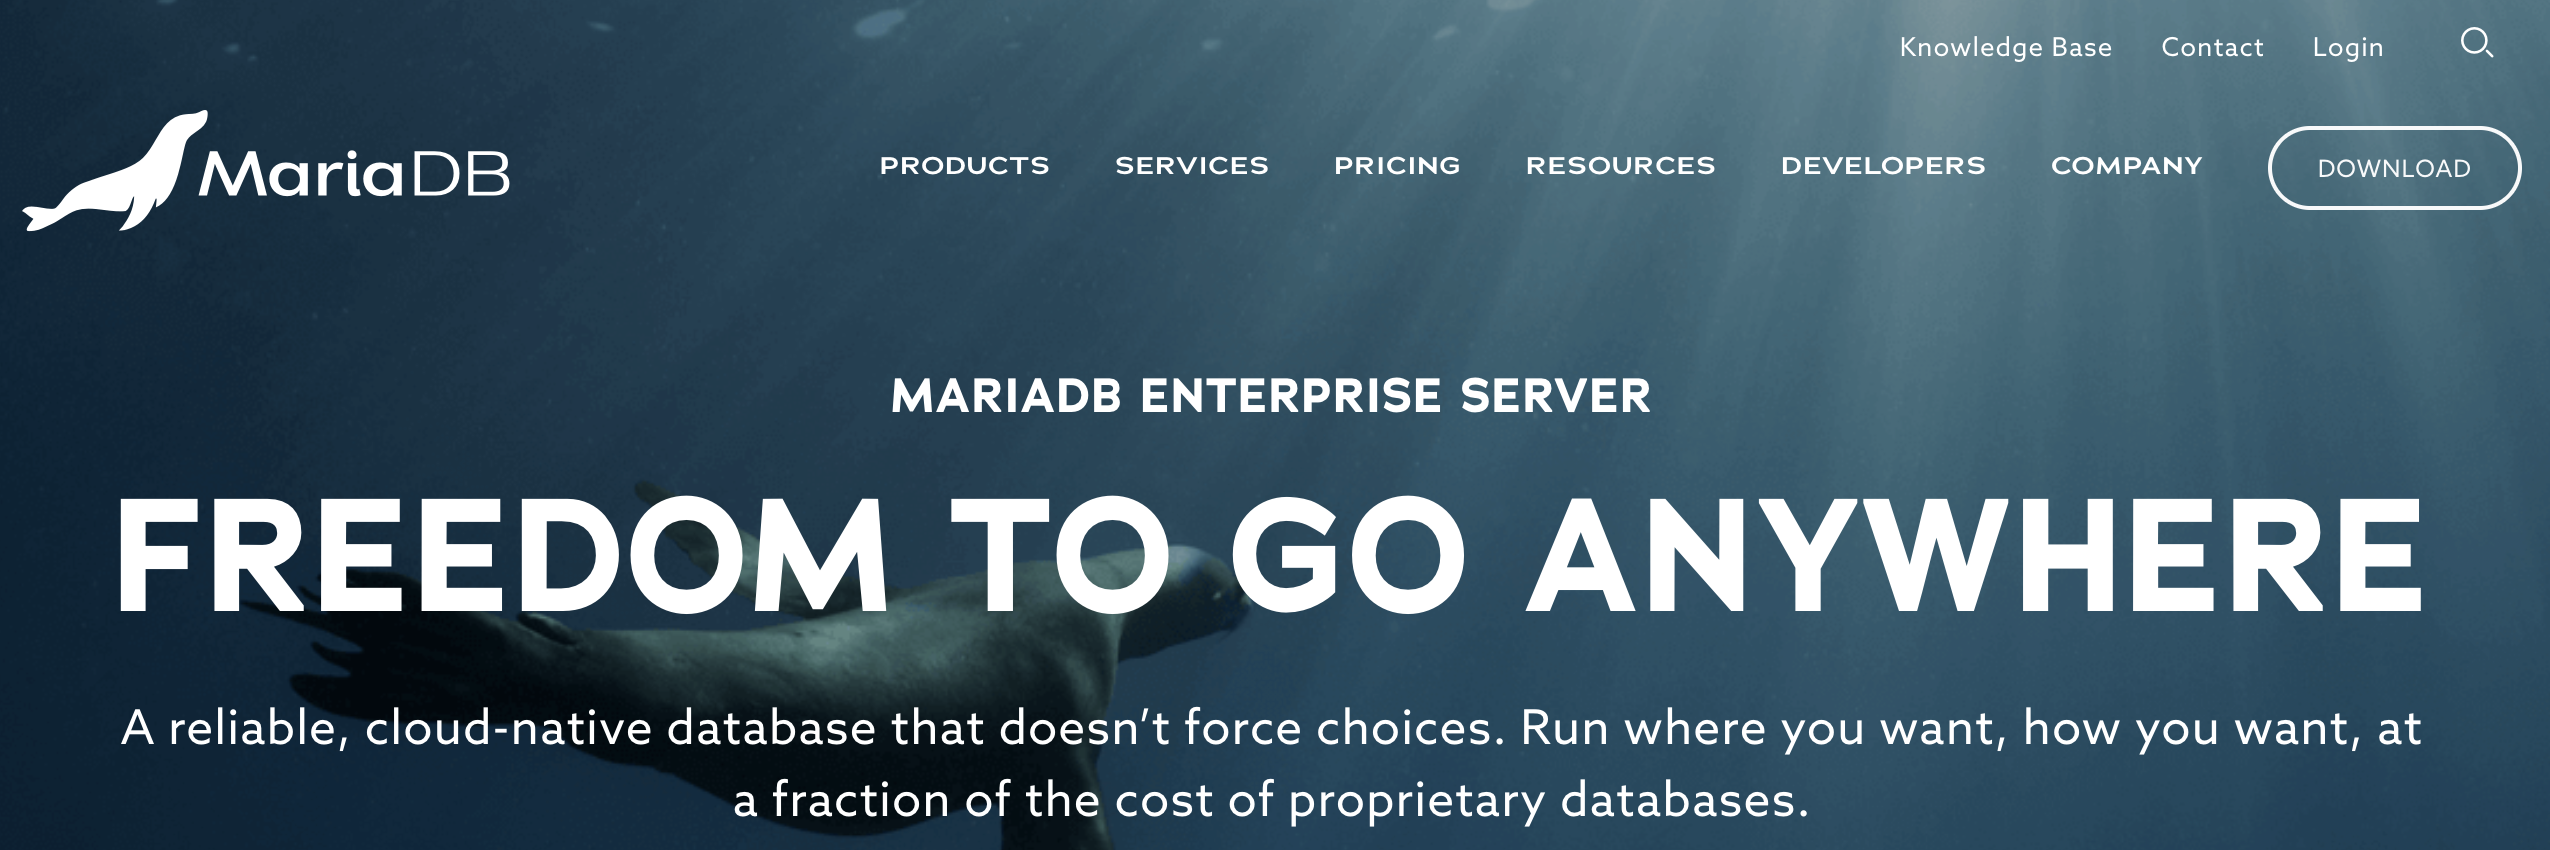 MariaDB - Data Warehouse